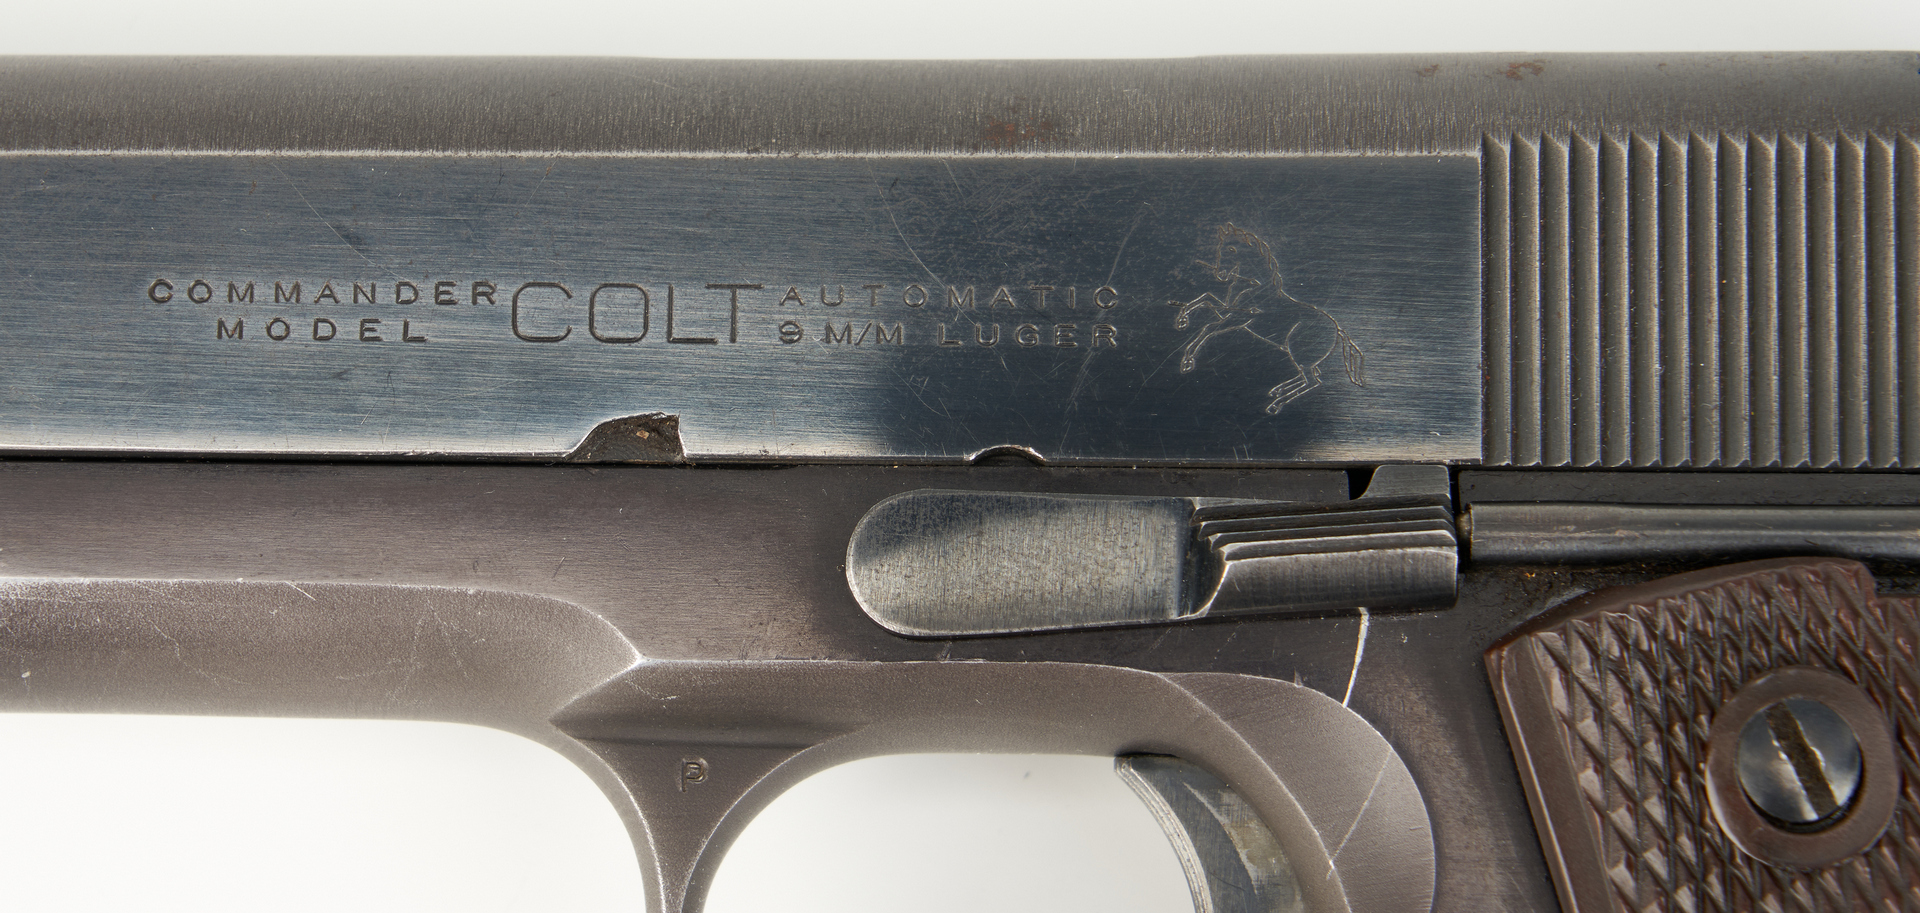 Lot 623: Boxed Smith & Wesson Pistol Model 39-2 plus Colt Commander Lightweight